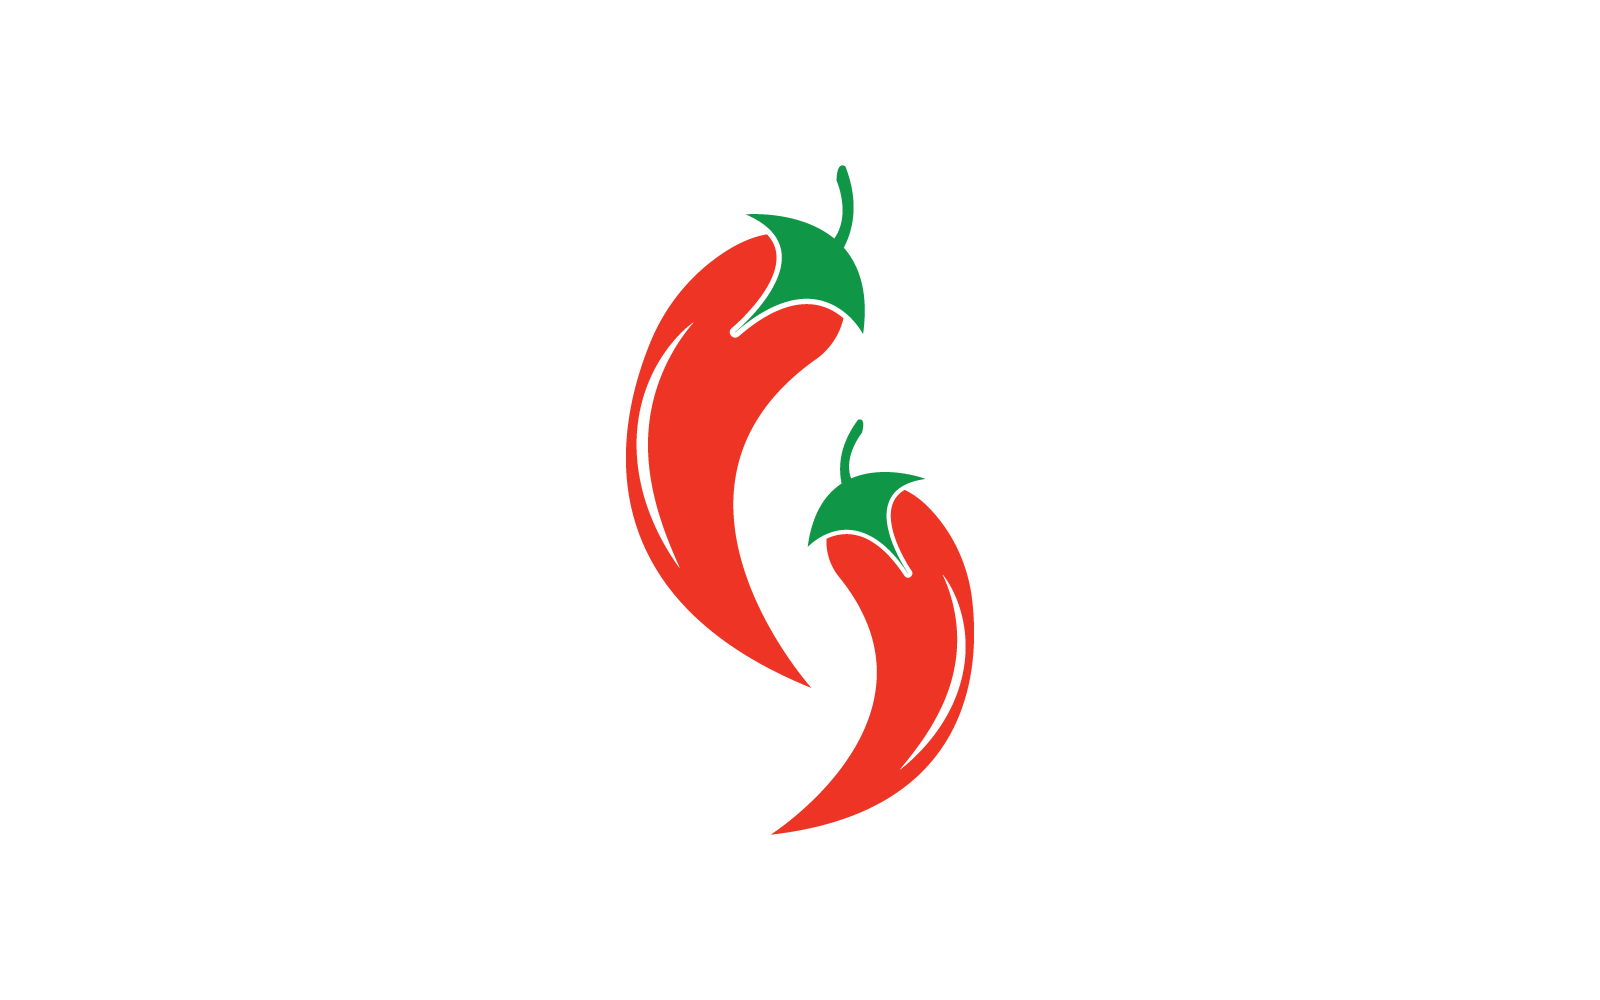 Red Chili illustration design logo vector template